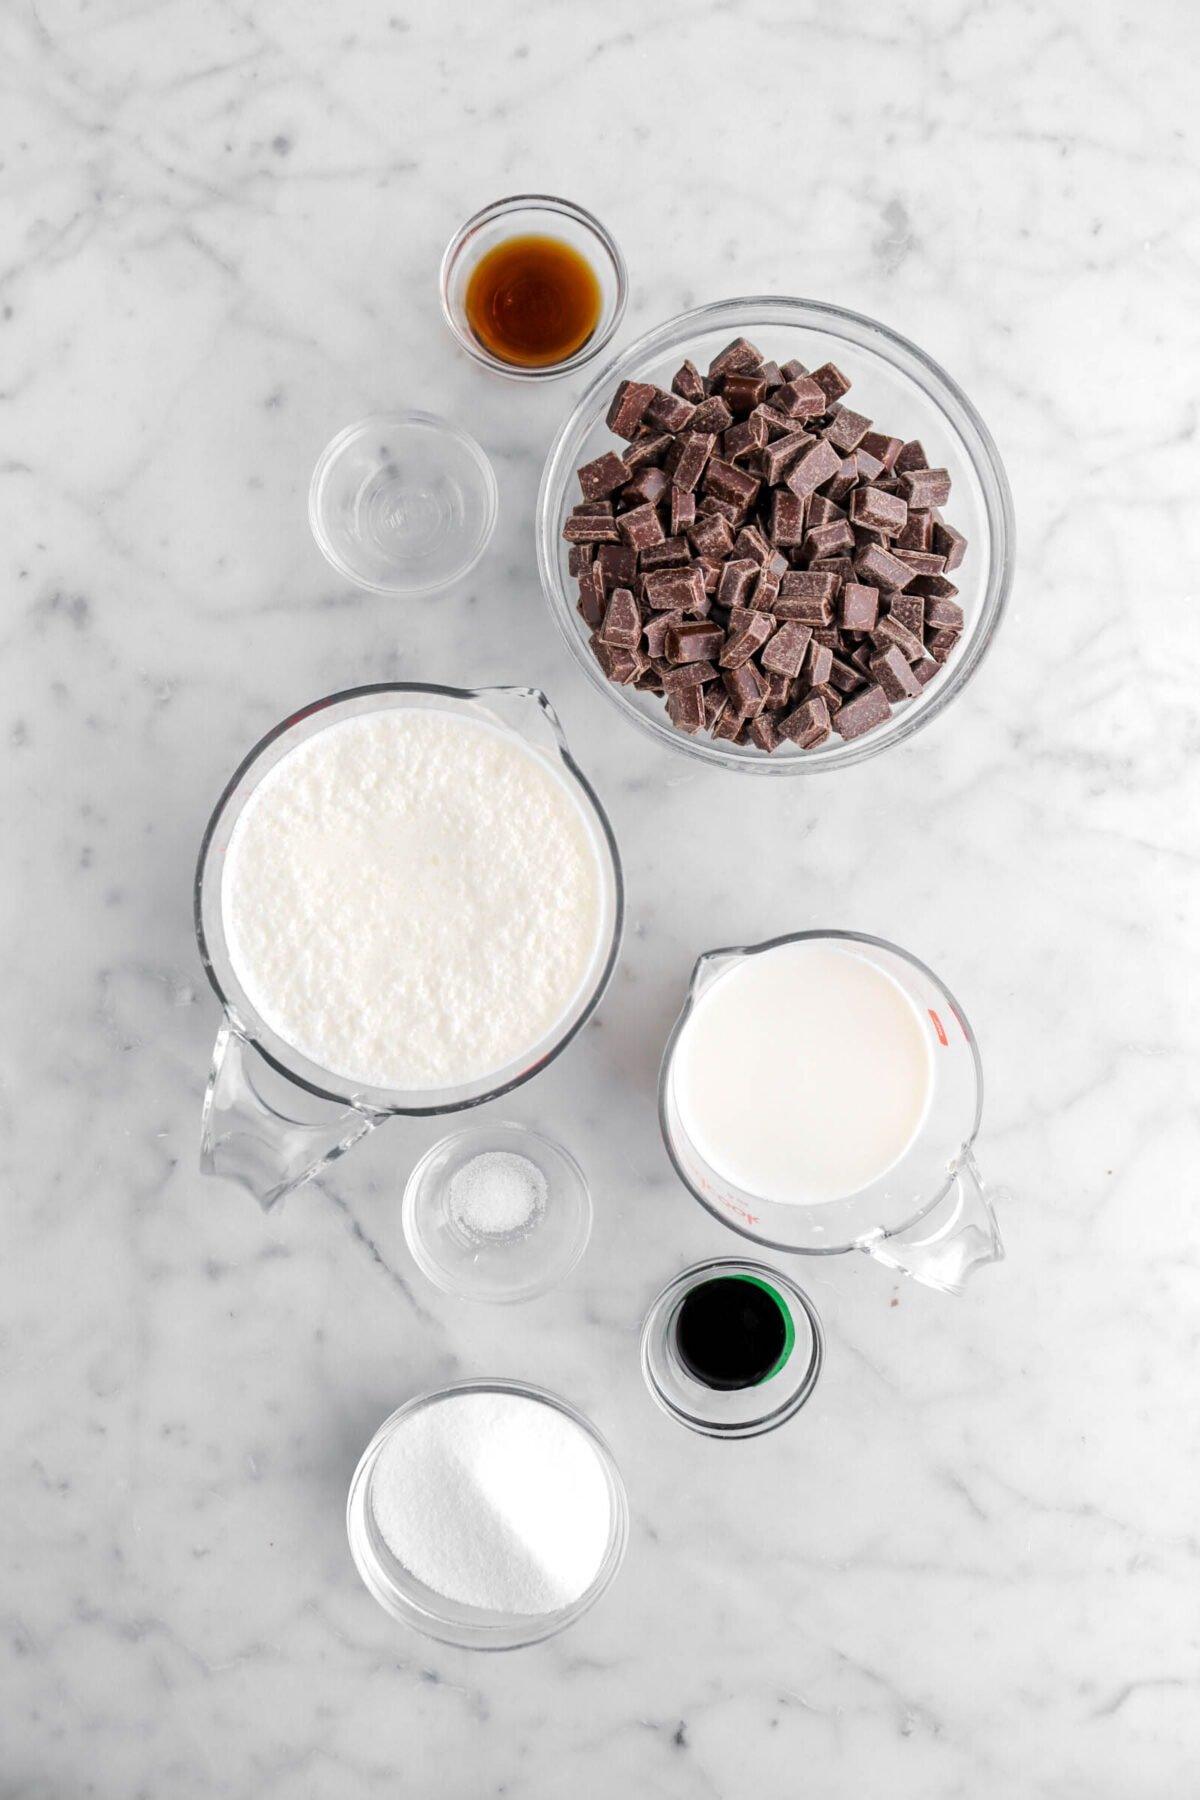 vanilla, peppermint extract, chocolate chunks, milk, cream, salt, green food dye, and sugar on marble surface.